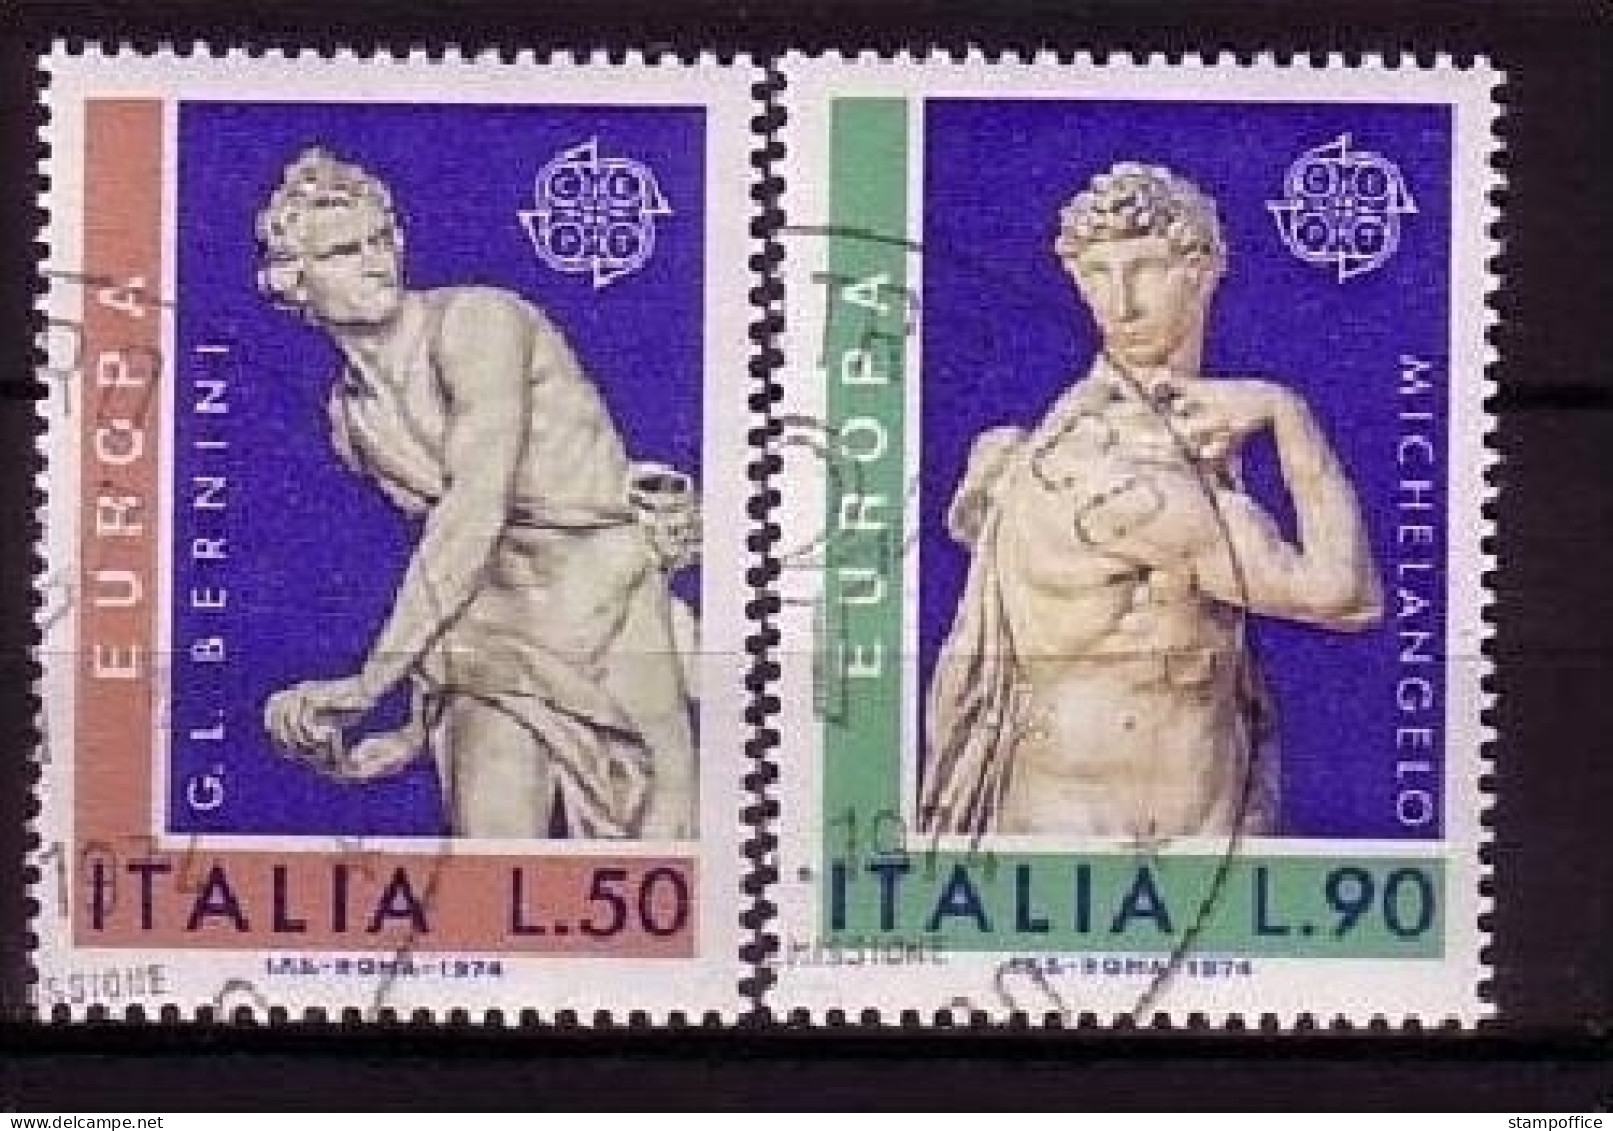 ITALIEN MI-NR. 1440-1441 GESTEMPELT(USED) EUROPA 1974 SKULPTUREN MICHELANGELO BERNINI - 1974